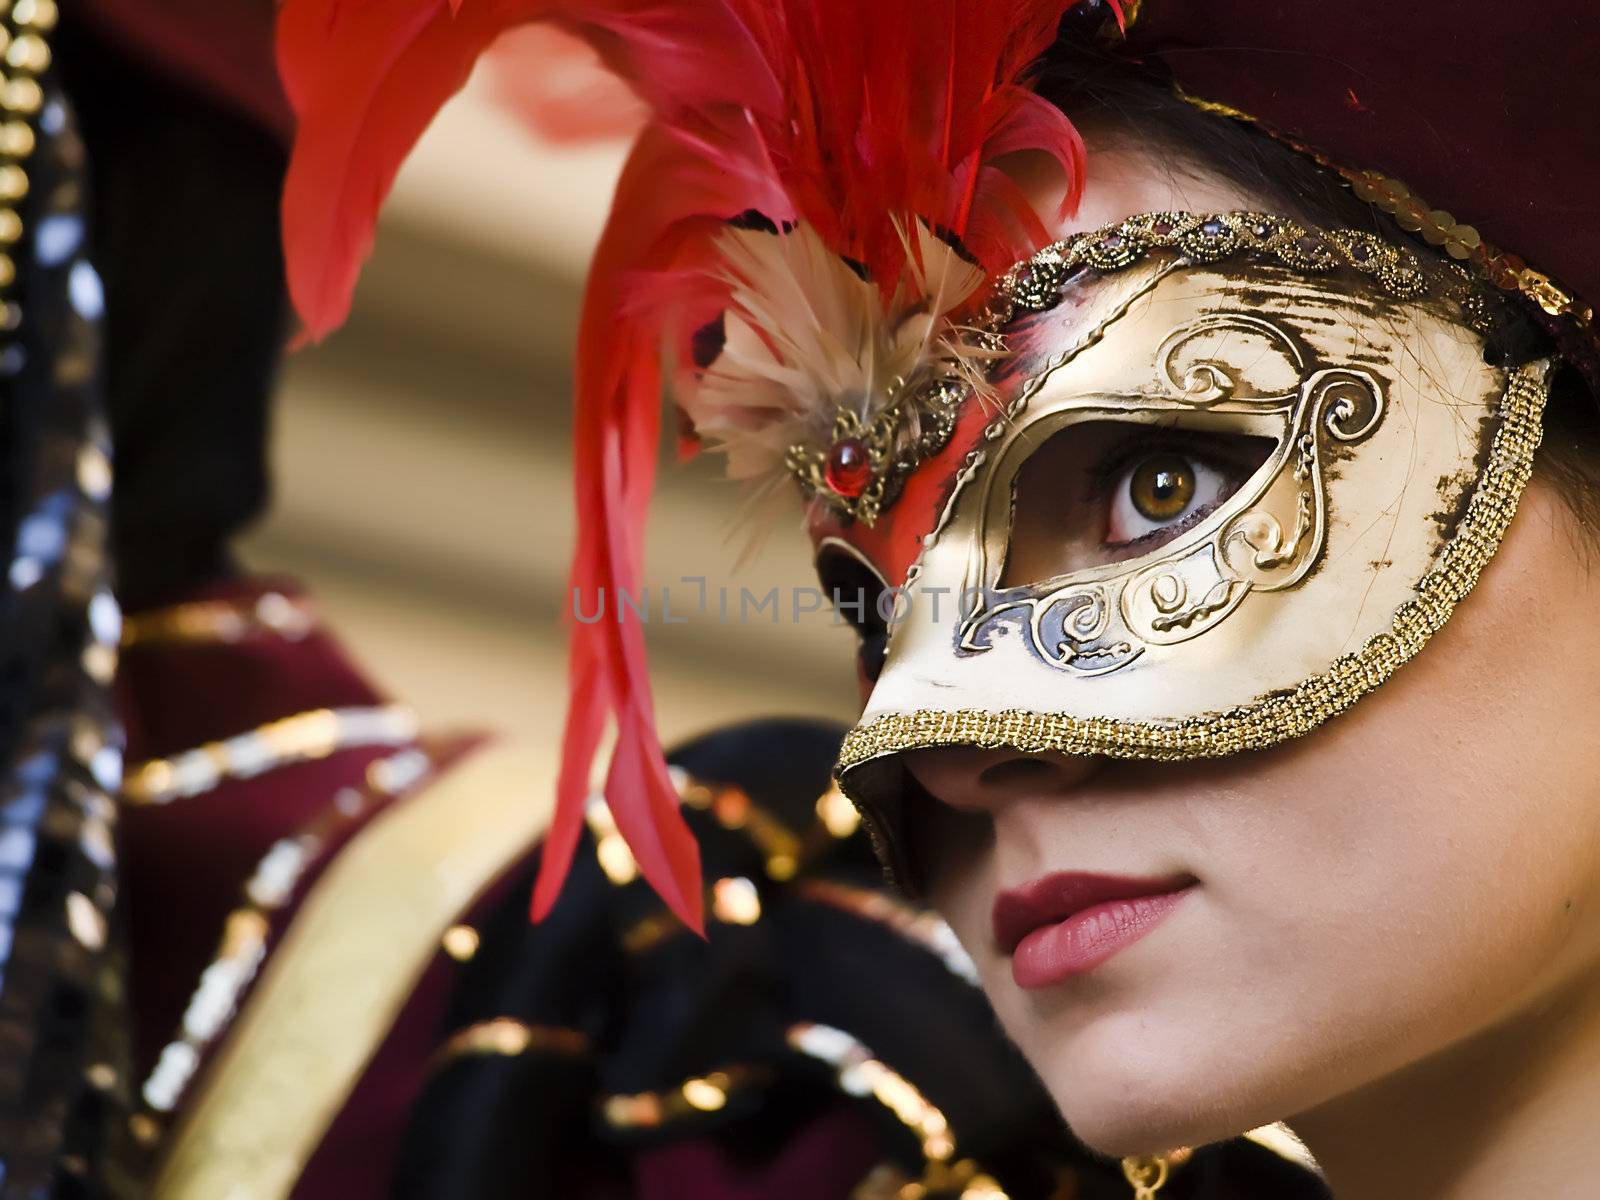 VALLETTA, MALTA - Feb 21st 2009 - Woman wearing beautiful Venetian style mask and costume at the International Carnival of Malta 2009